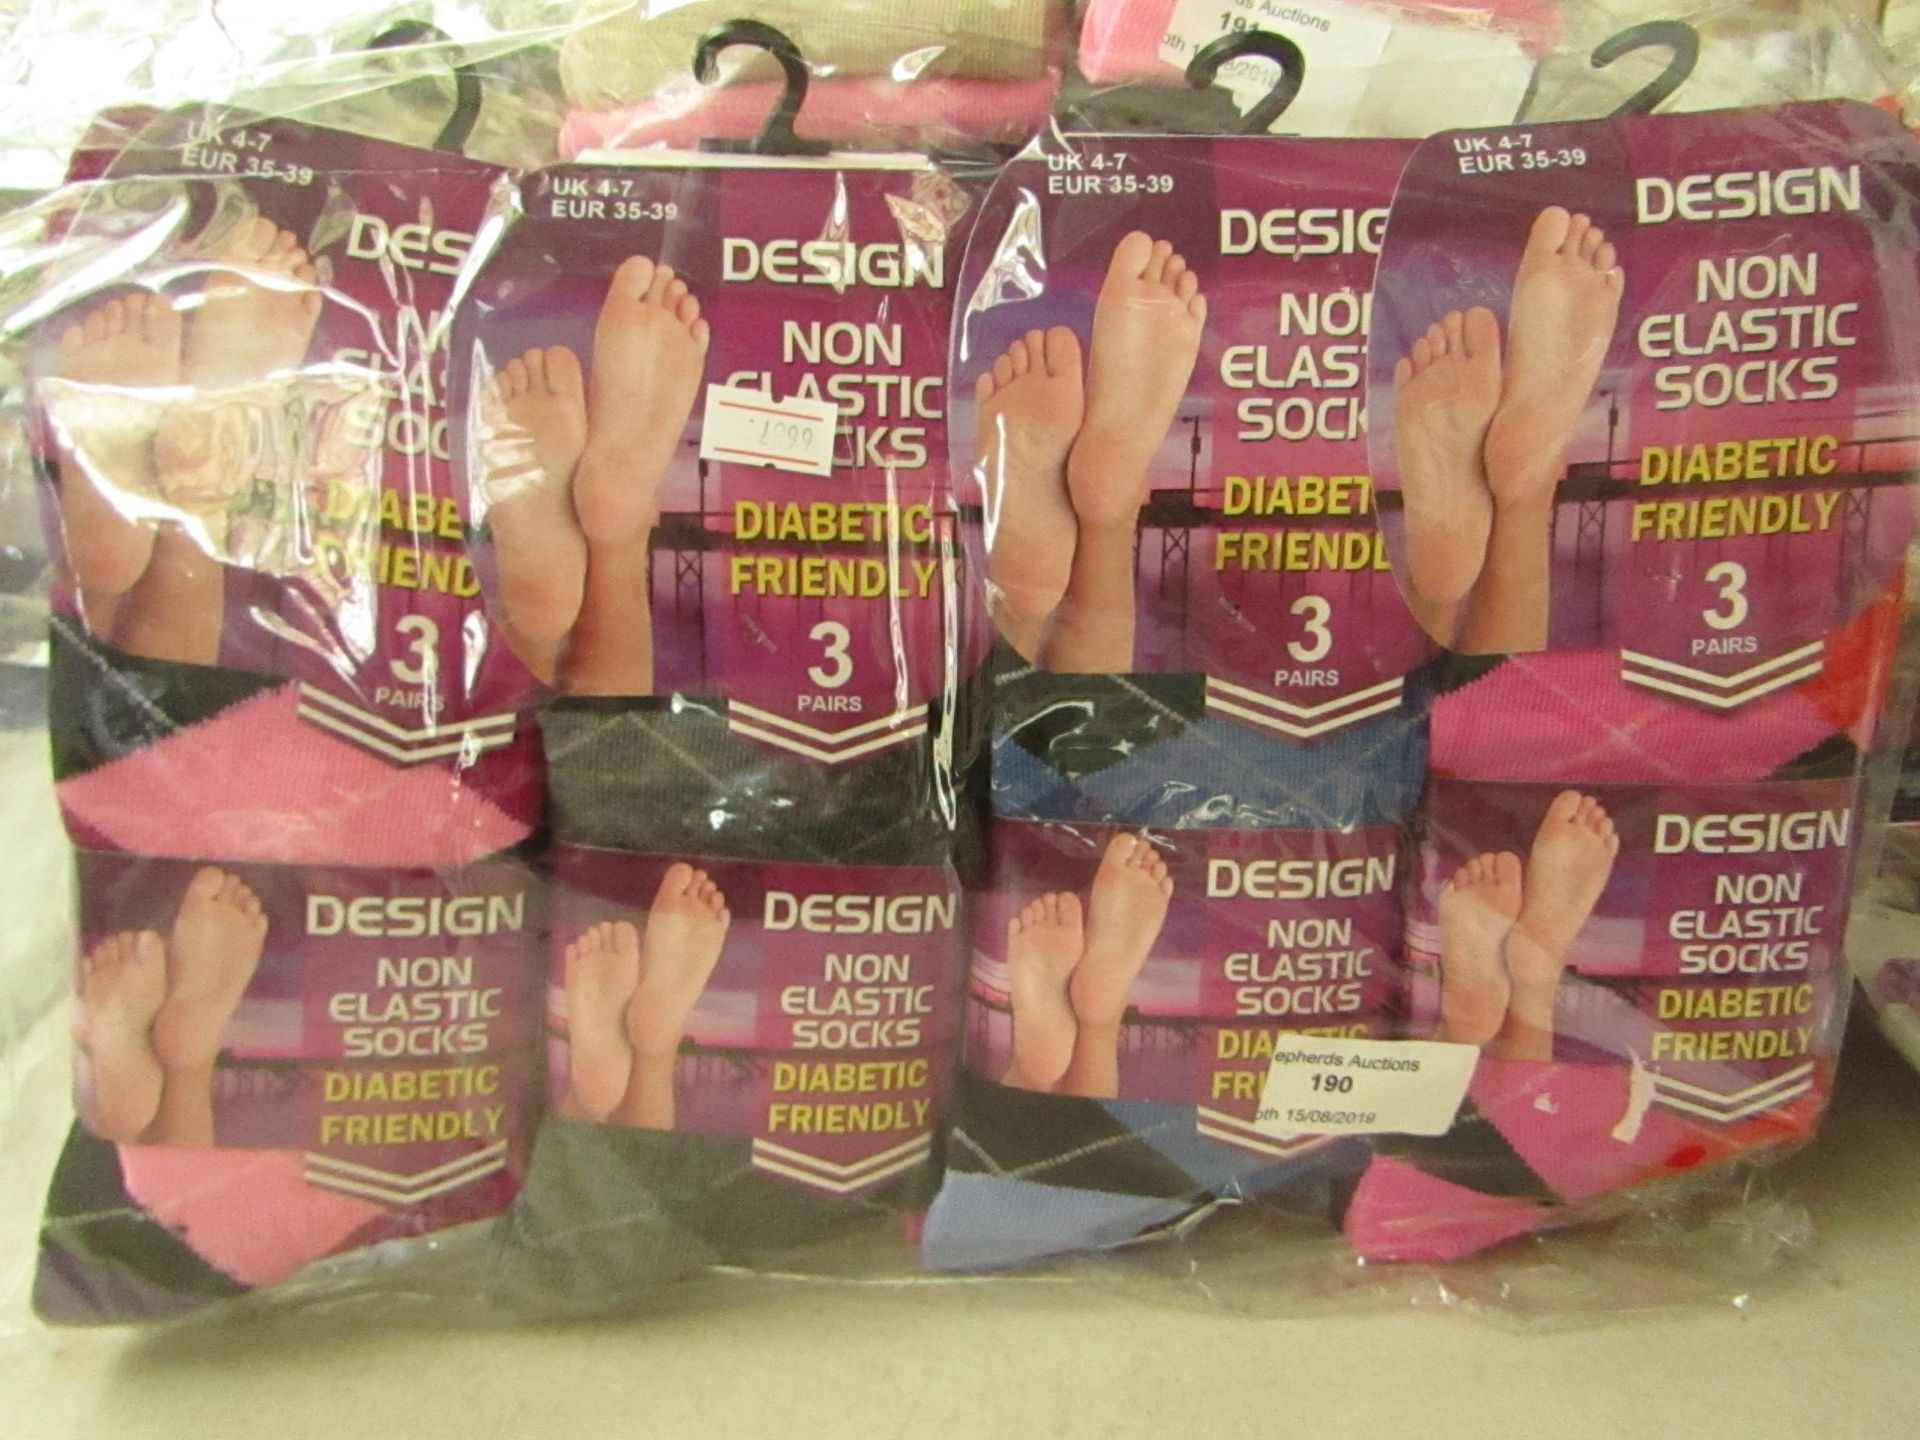 12 x pairs of Ladies Design Non Elastic Diabetic Socks size 4-6 new & packaged